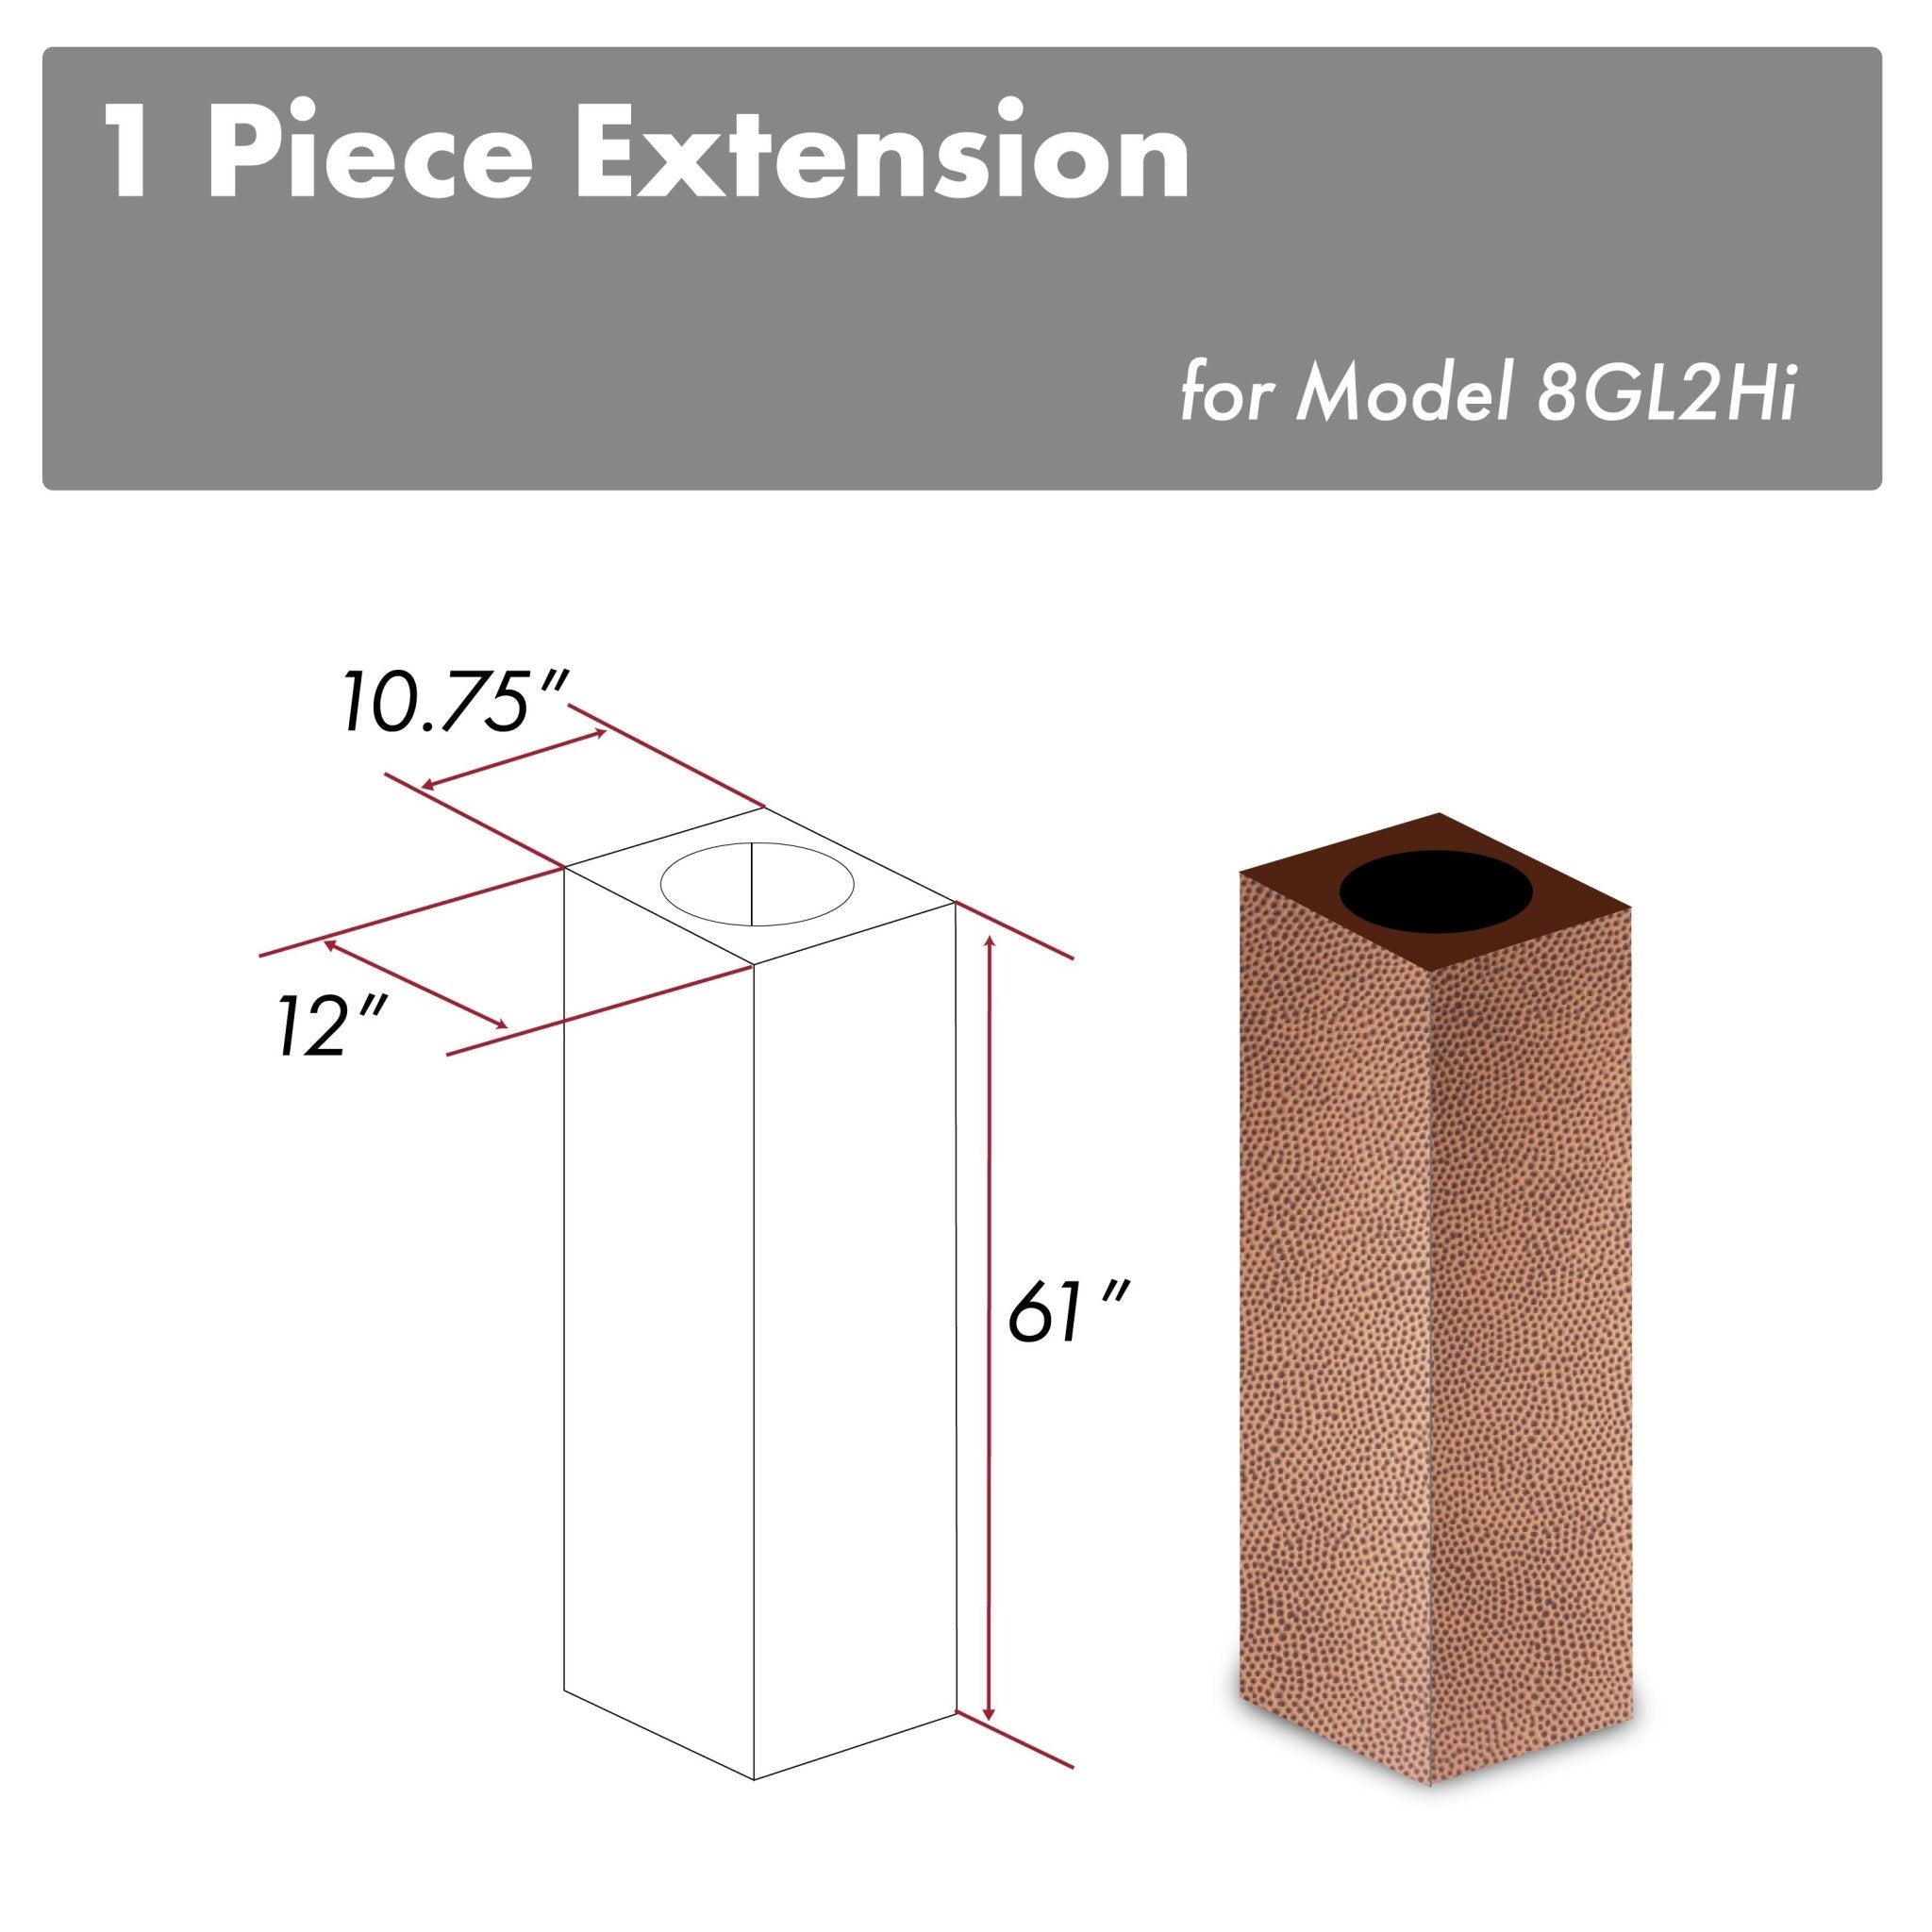 ZLINE Kitchen and Bath, ZLINE 61" Hand Hammered Copper Finished Chimney Extension for Ceilings up to 12.5 ft. (8GL2iH-E), 8GL2Hi-E,